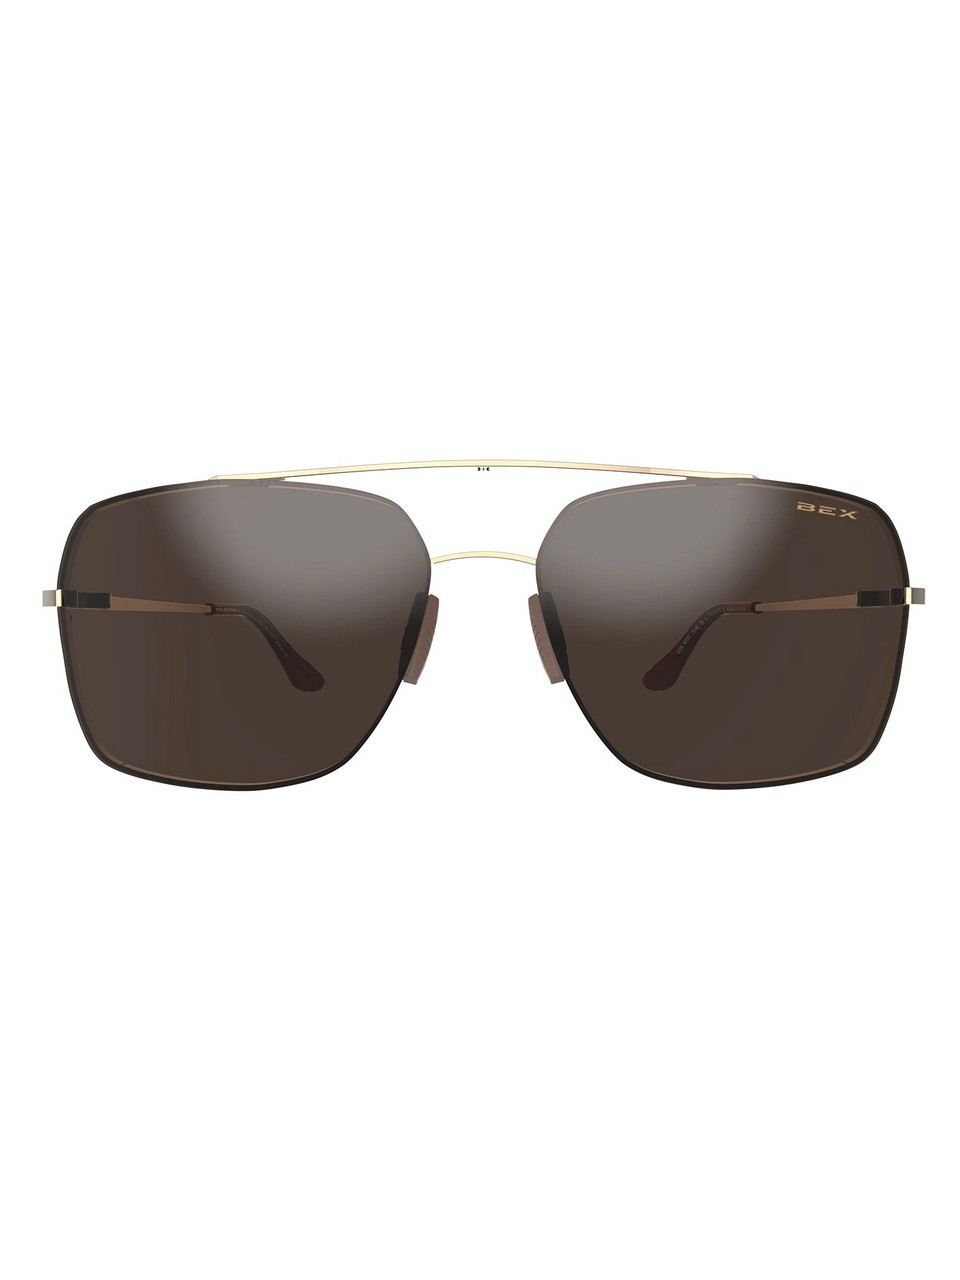 Bex Sunglasses® Gold/Brown Pilot Sunglasses